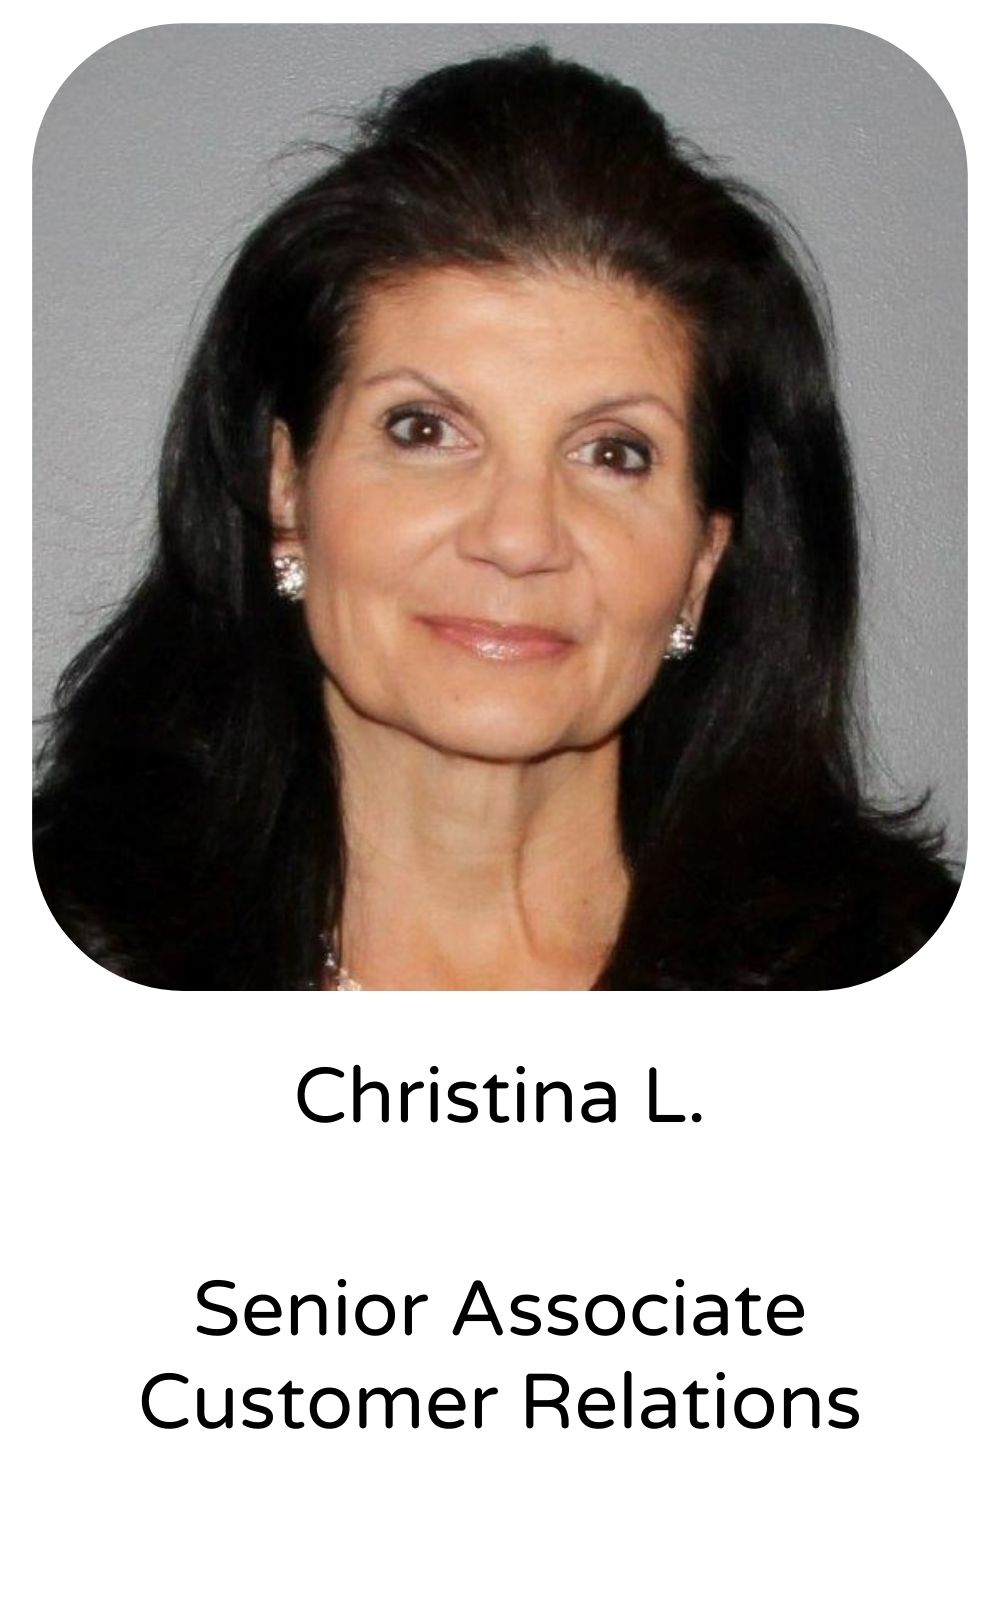 Christina L, Senior Associate, Customer Relations